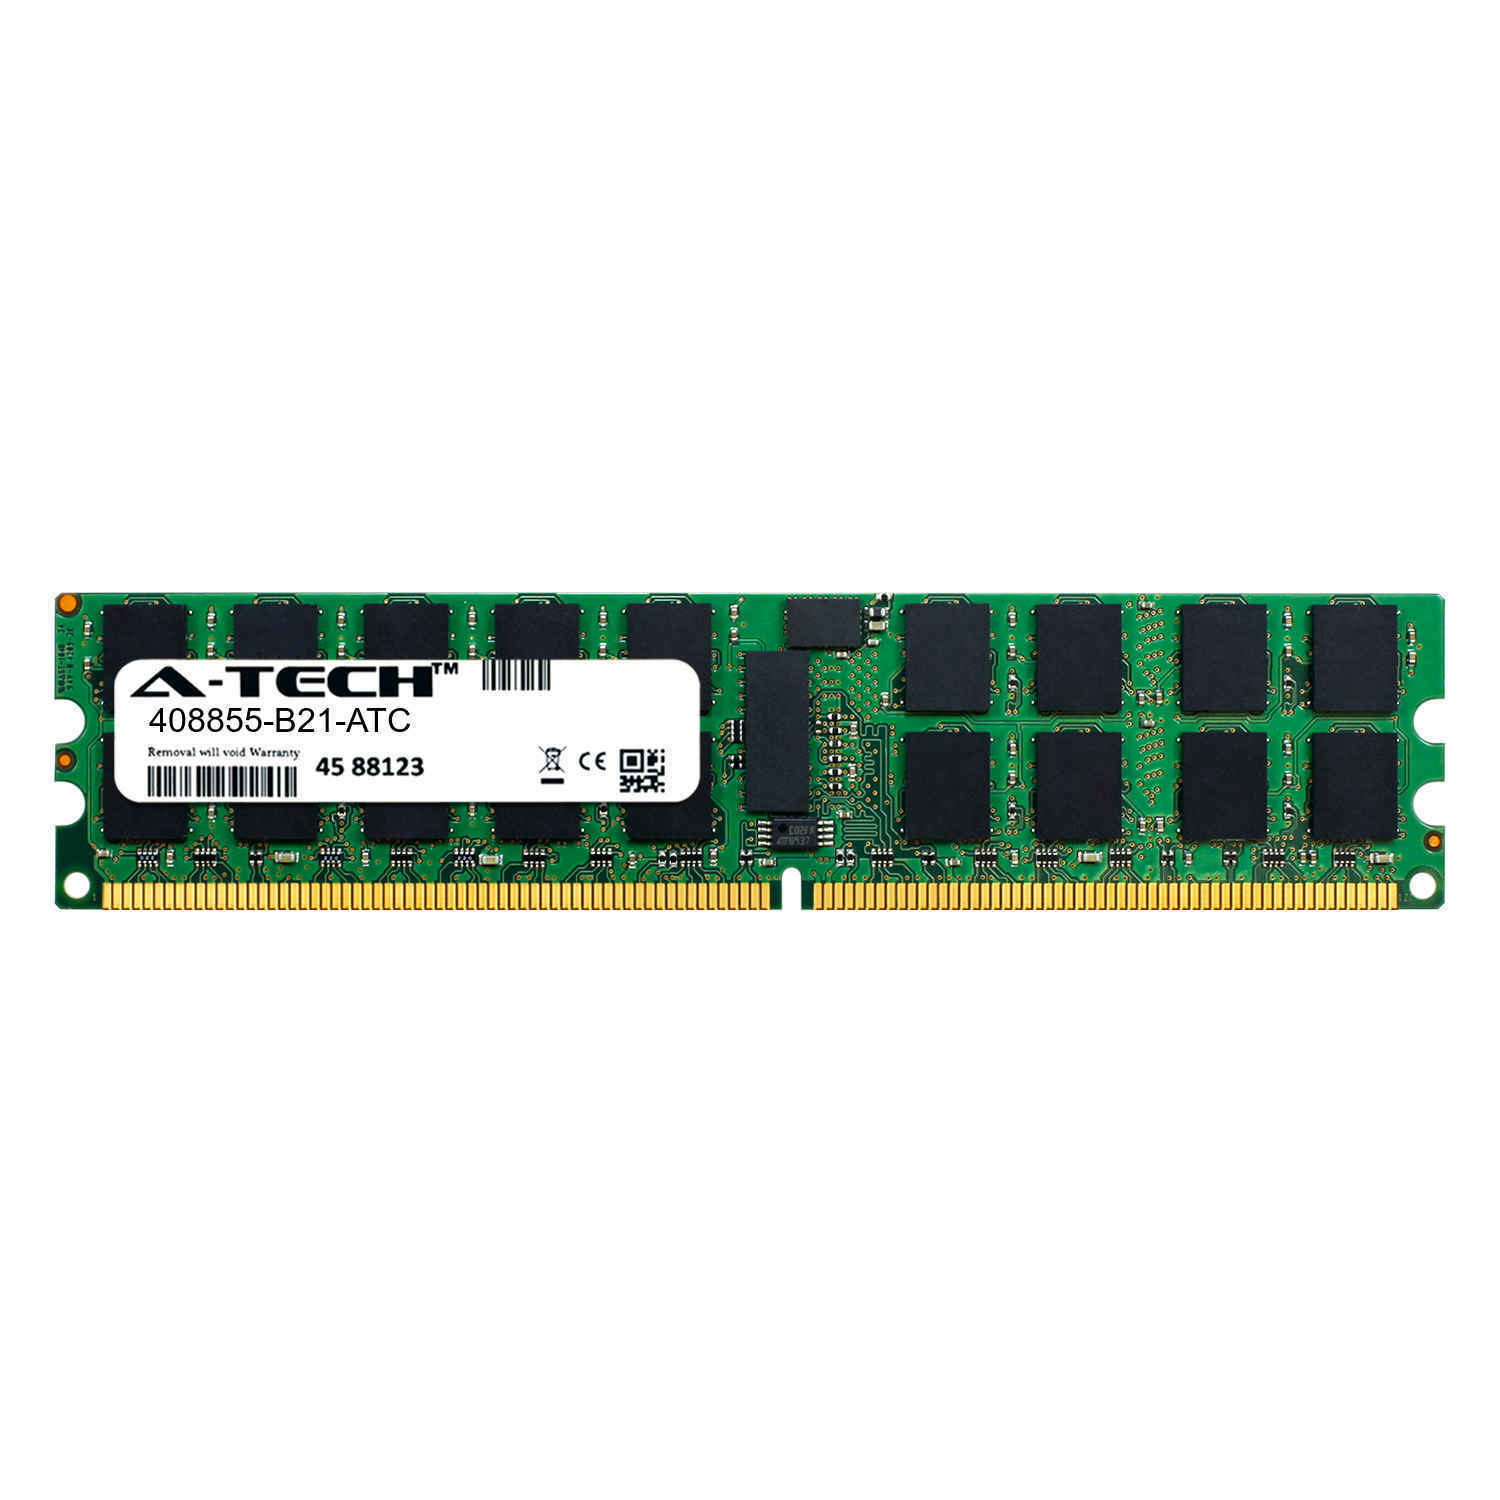 8GB DDR2 PC2-5300R 667MHz RDIMM (HP 408855-B21 Equivalent) Server Memory RAM